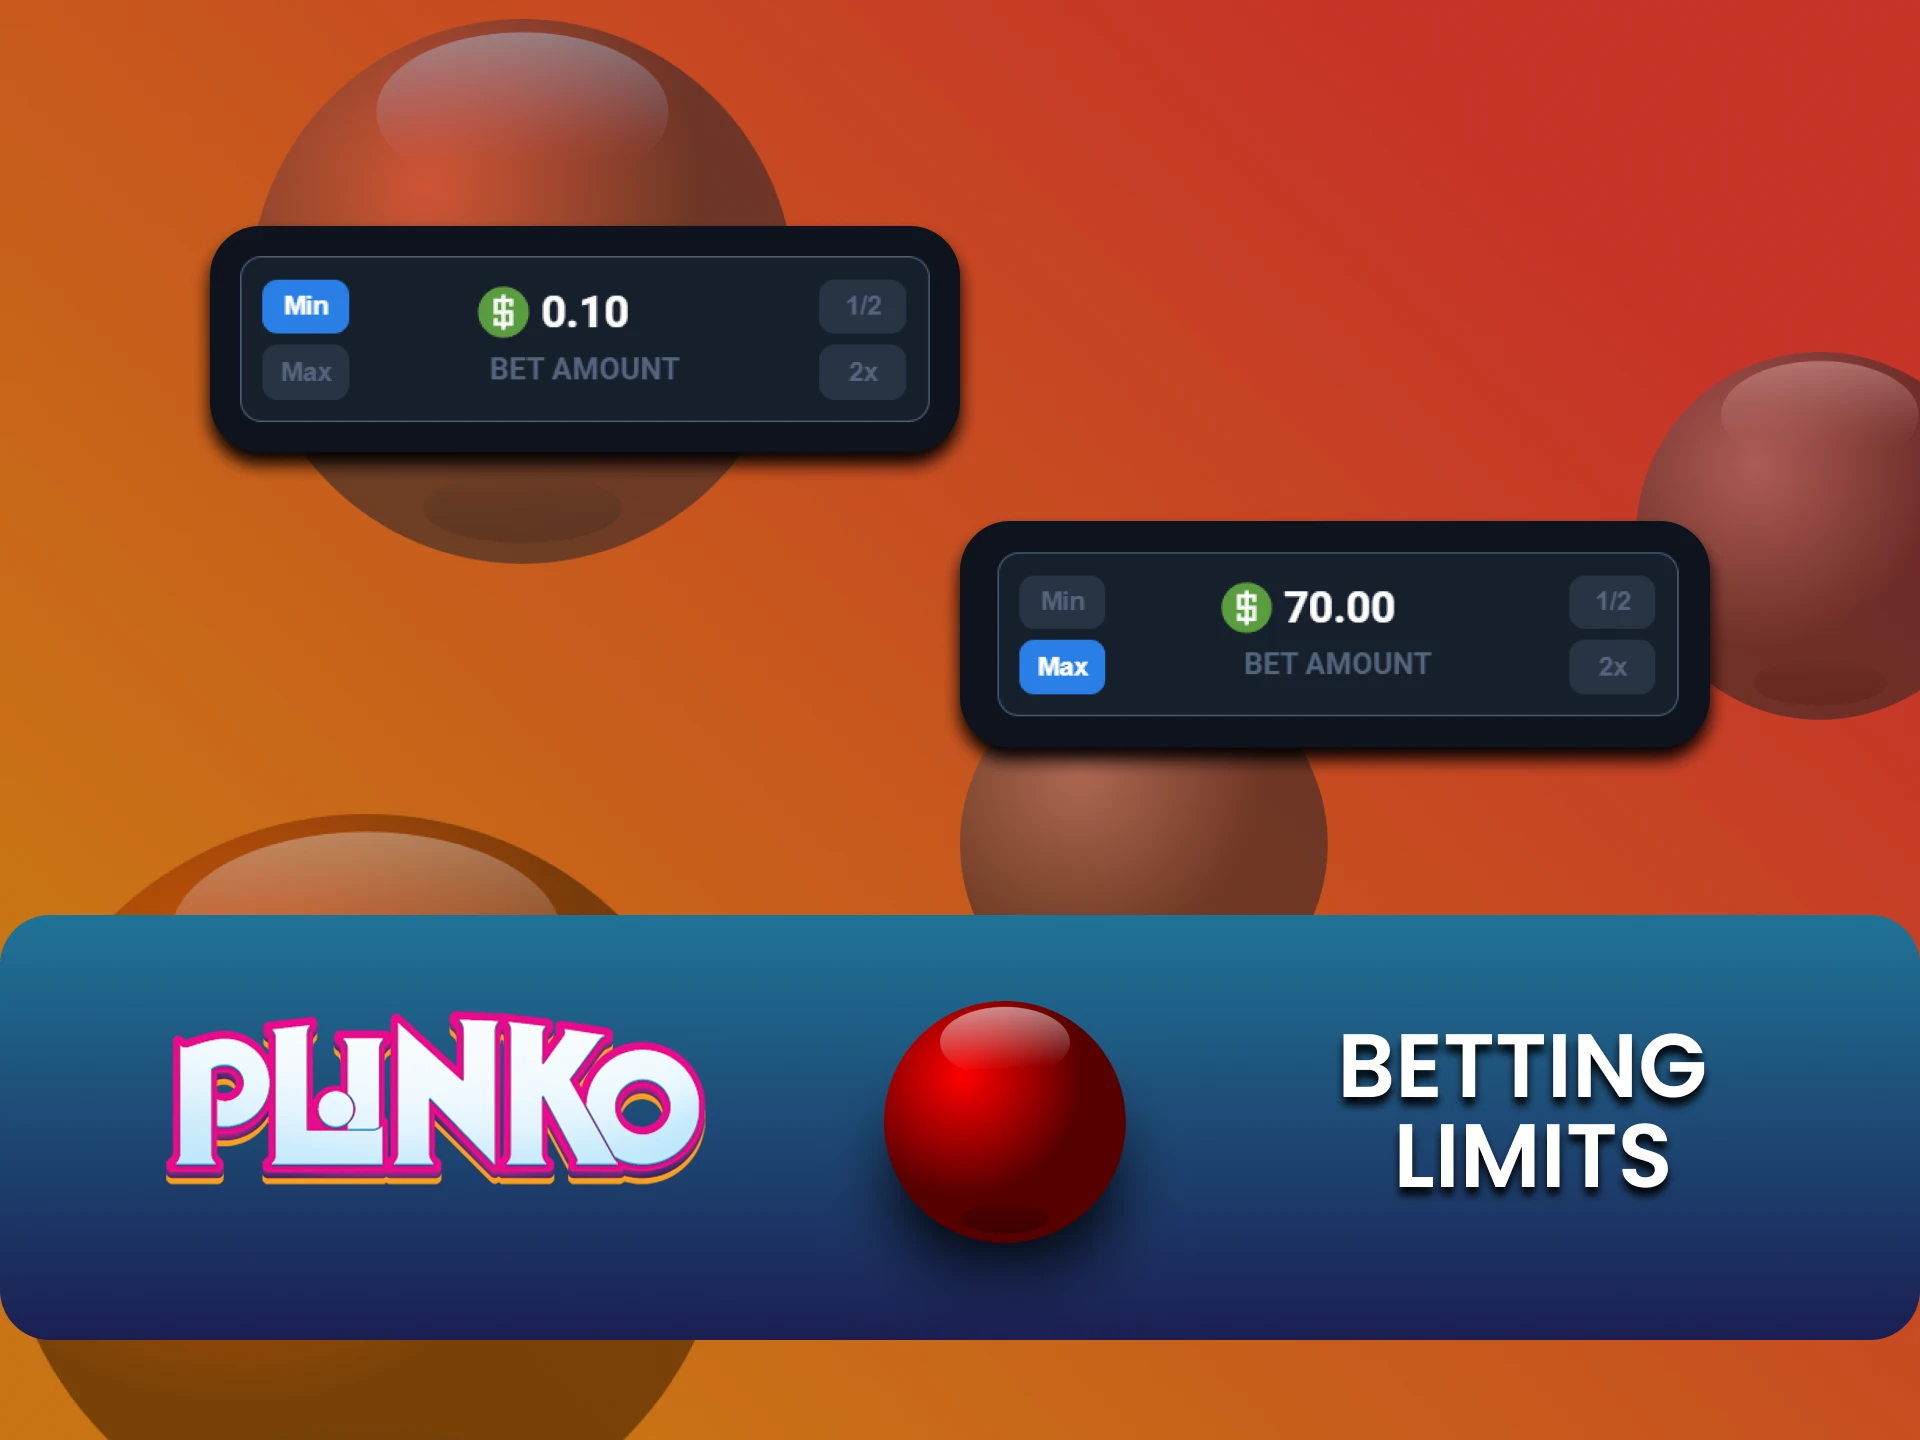 Learn about betting limits in Plinko.